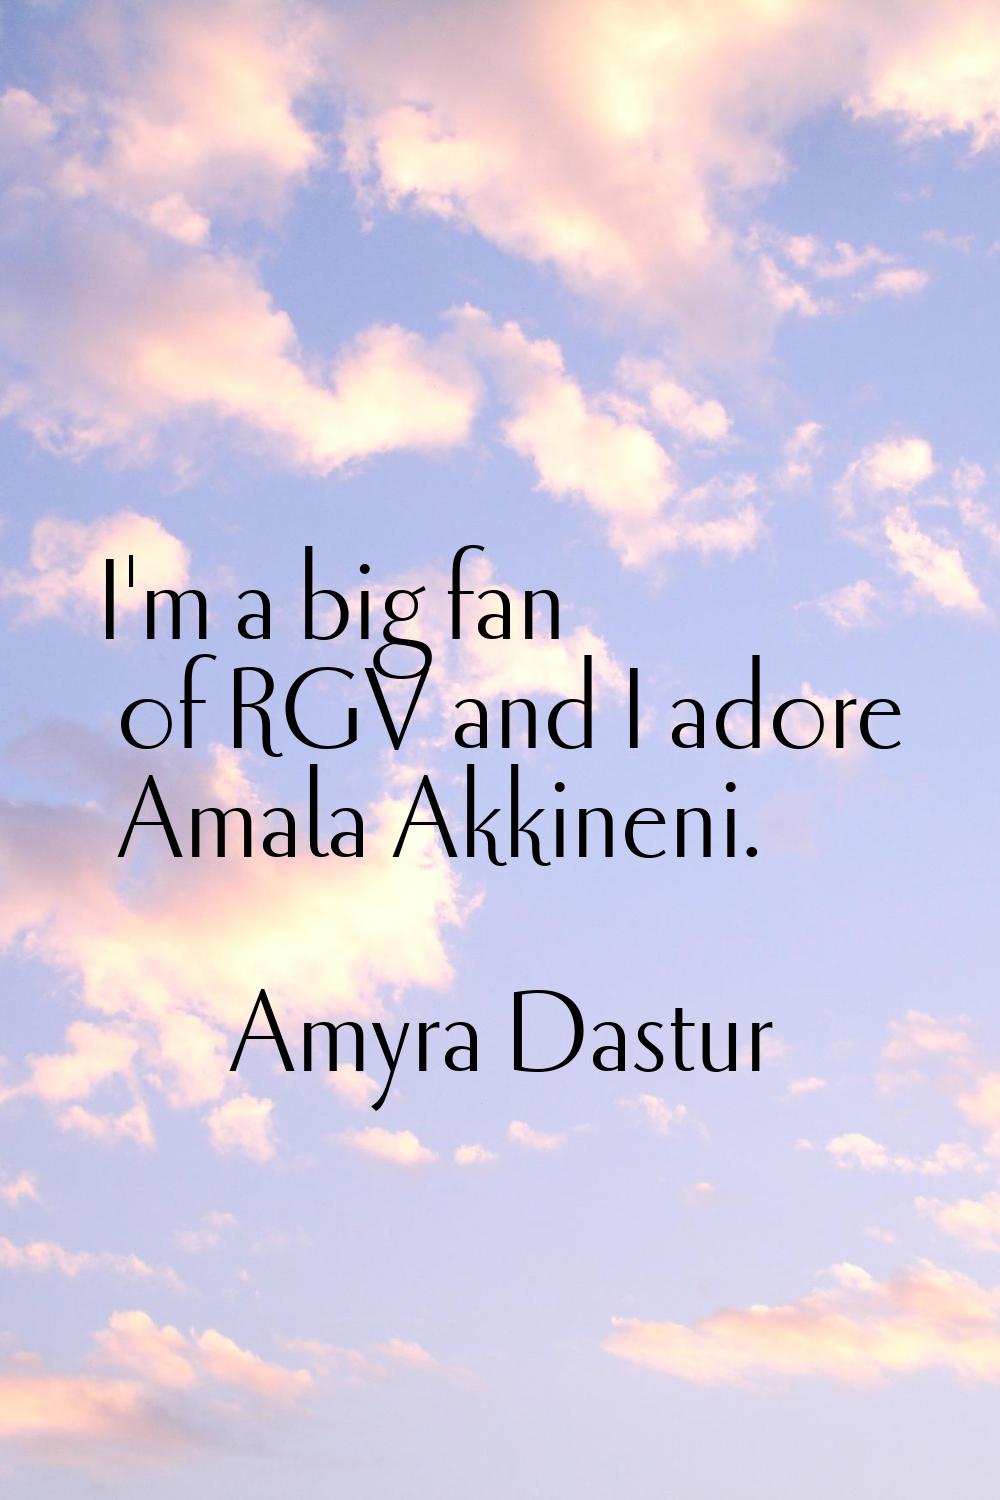 I'm a big fan of RGV and I adore Amala Akkineni.